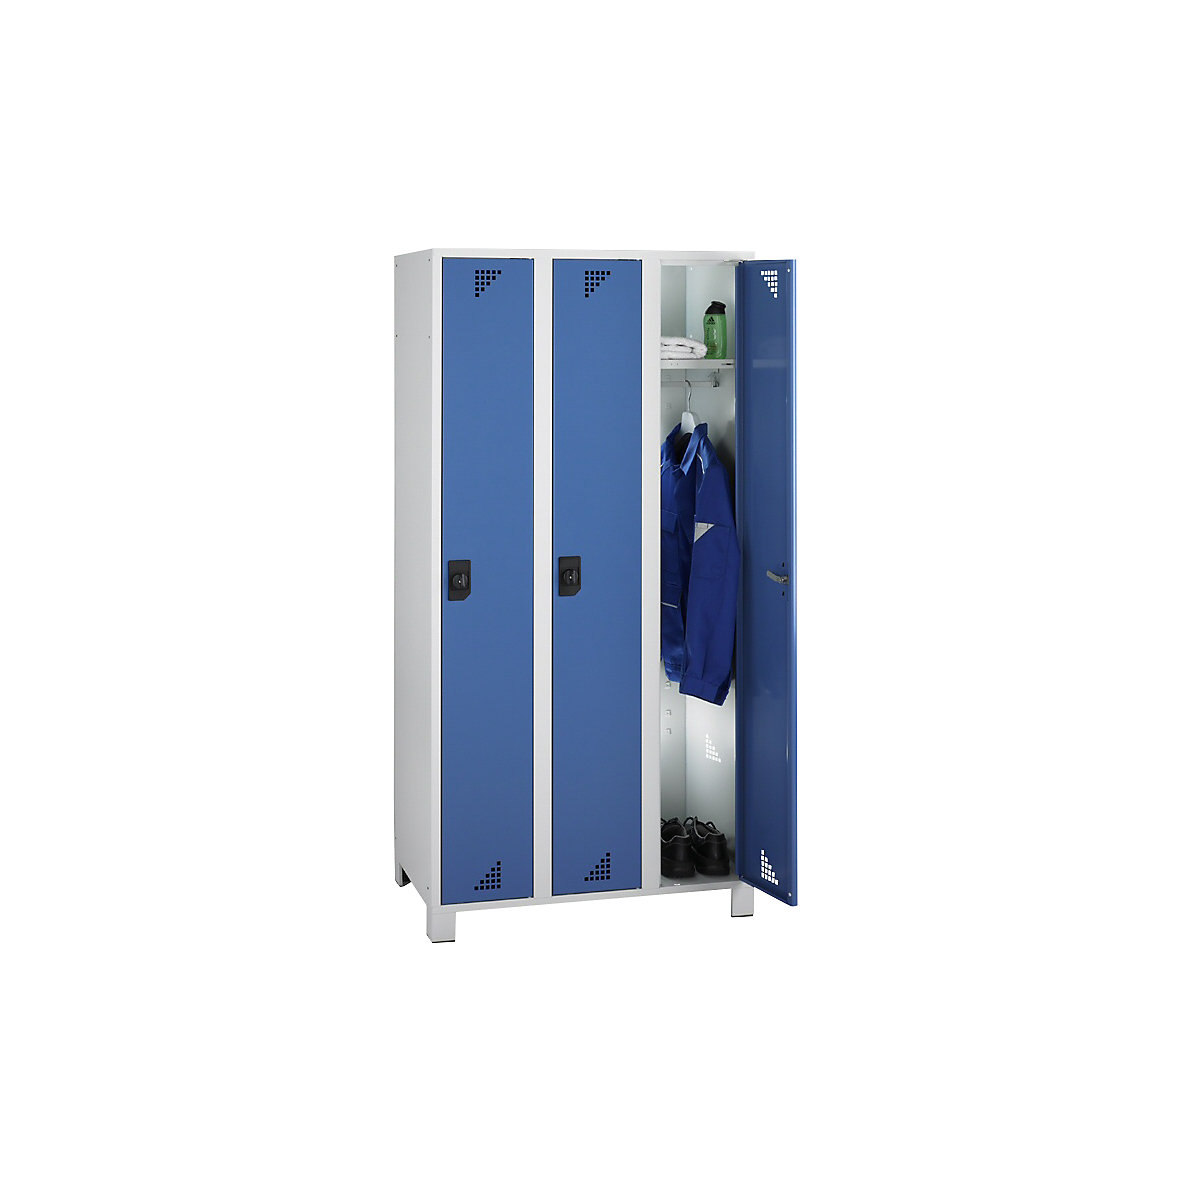 Multi-purpose cupboard and cloakroom locker – eurokraft pro, locker height 1695 mm, 3 compartments, width 900 mm, light grey body, brilliant blue doors